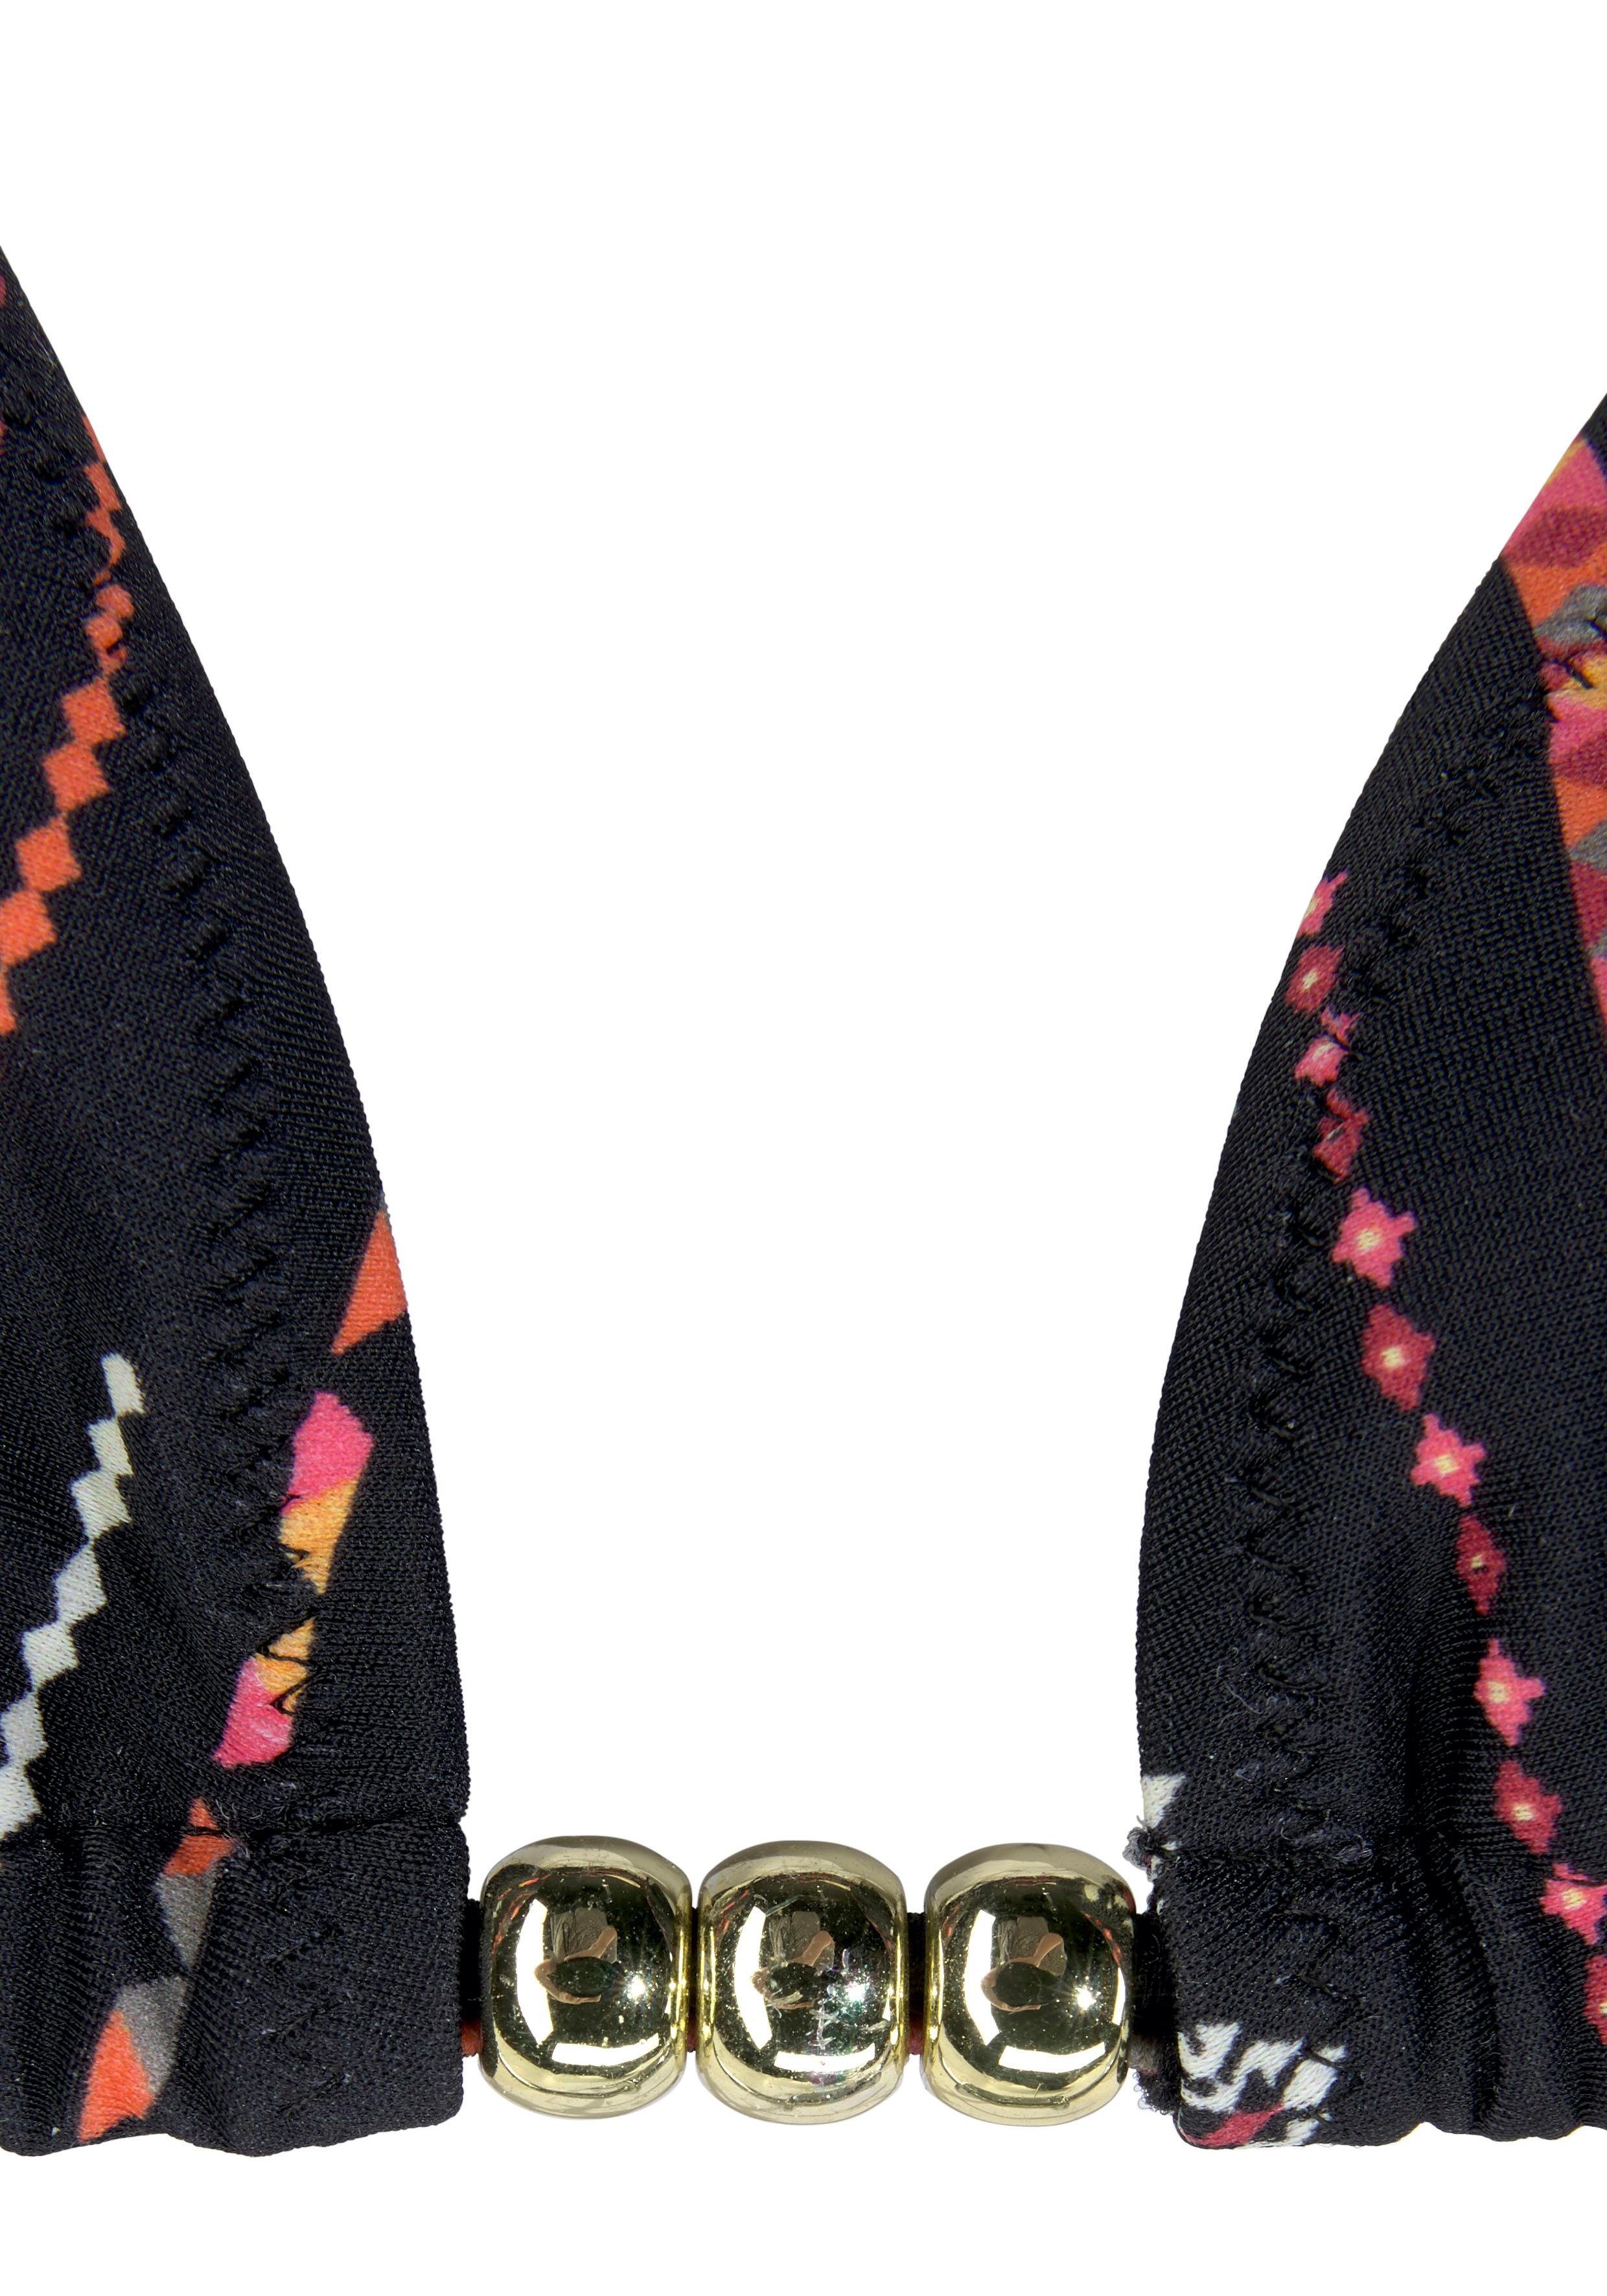 Wäsche/Bademode Bikinis Buffalo Triangel-Bikini mit Perlen-Accessoires